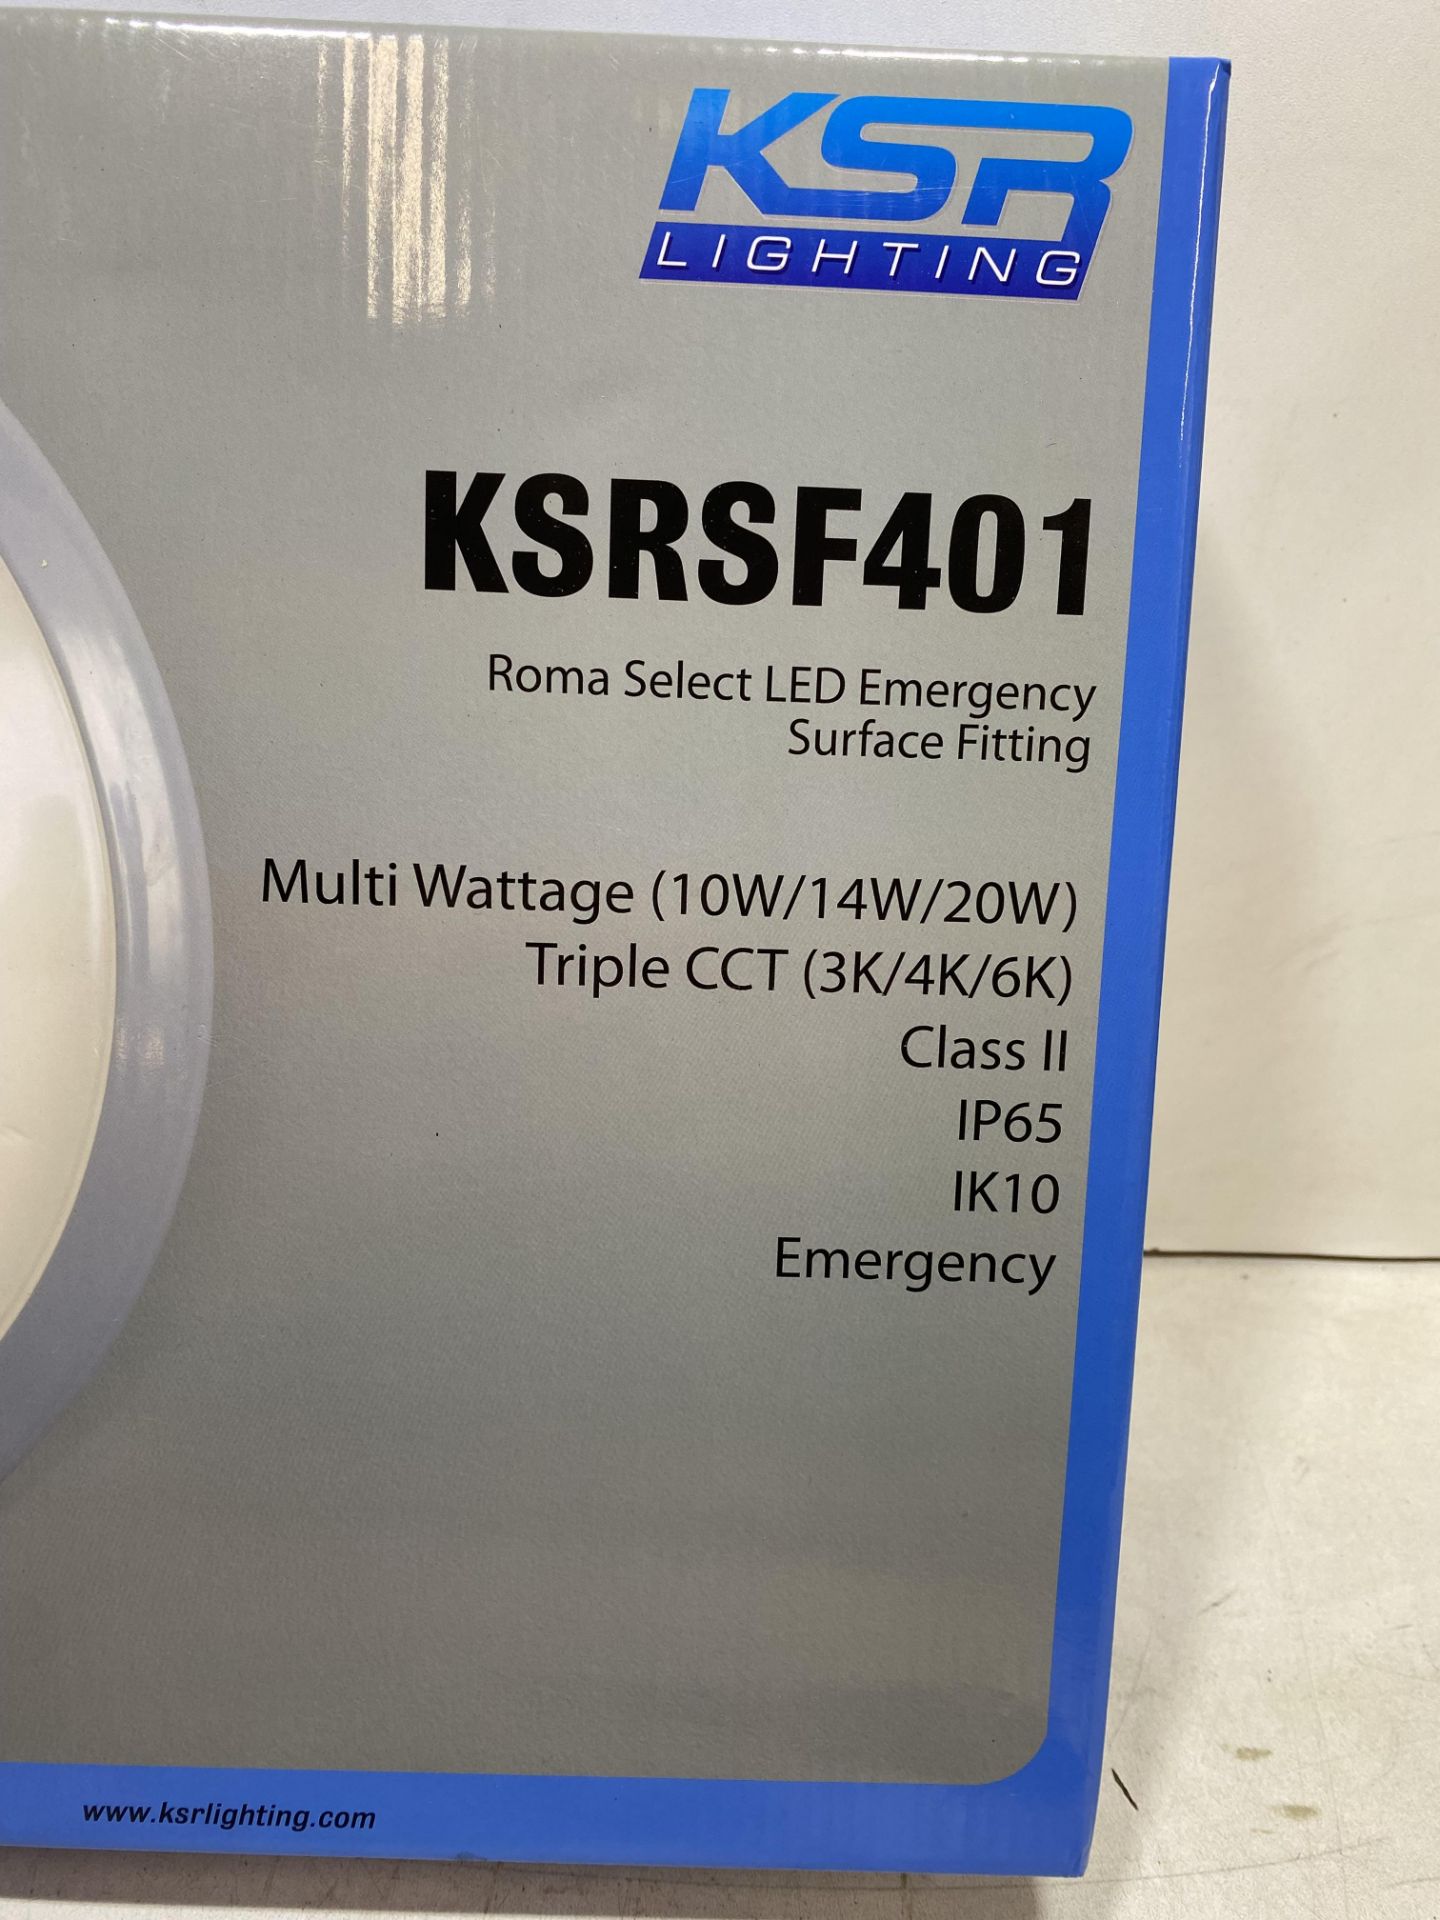 6 x KSR Lighting KSRSF401 Roma Select LED Emergency Surface Fitting Lights, White - Image 4 of 4